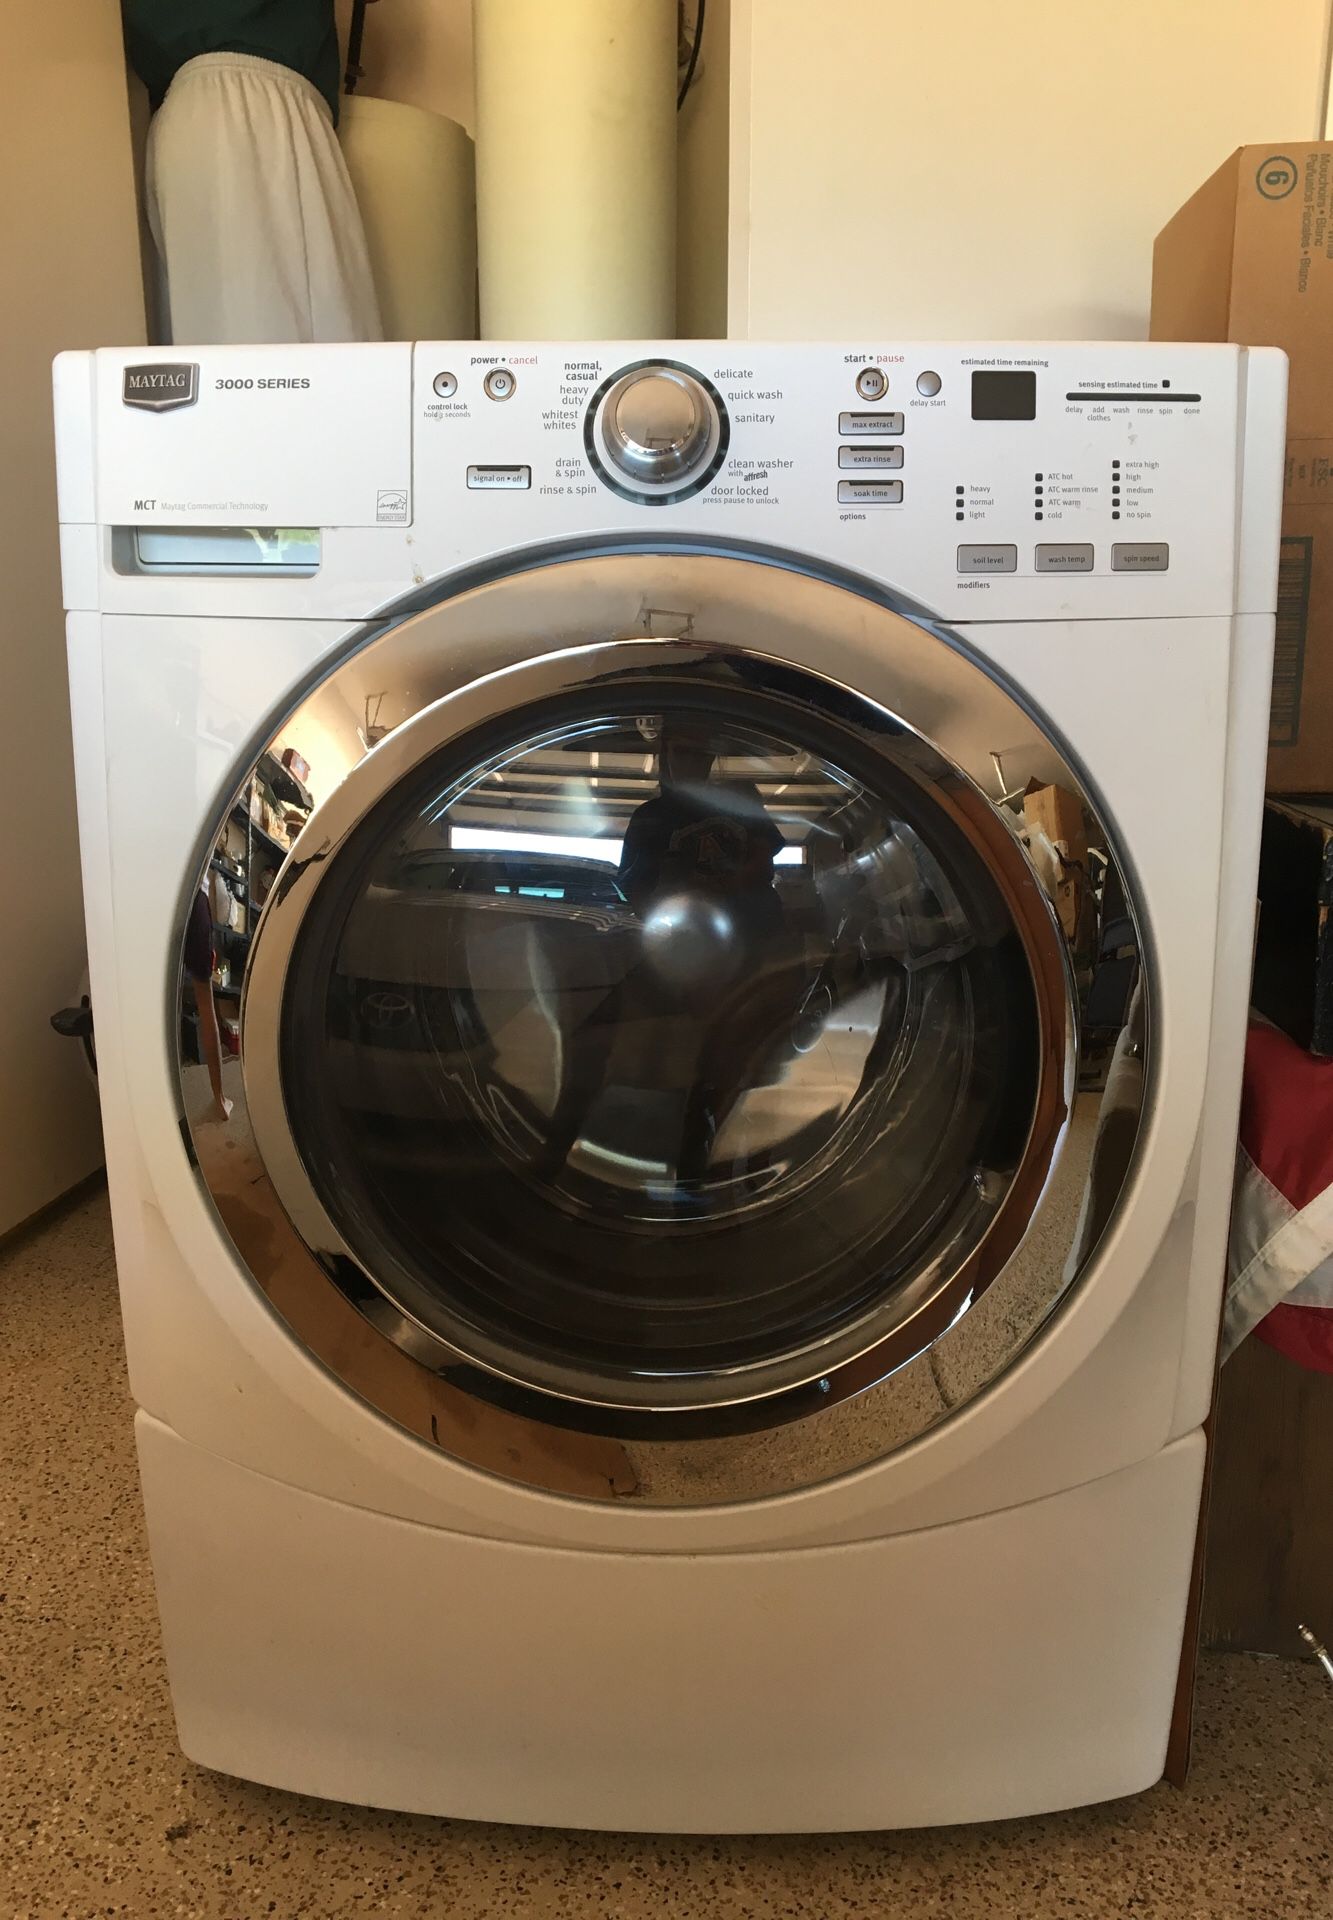 Maytag 3000 series washing machine